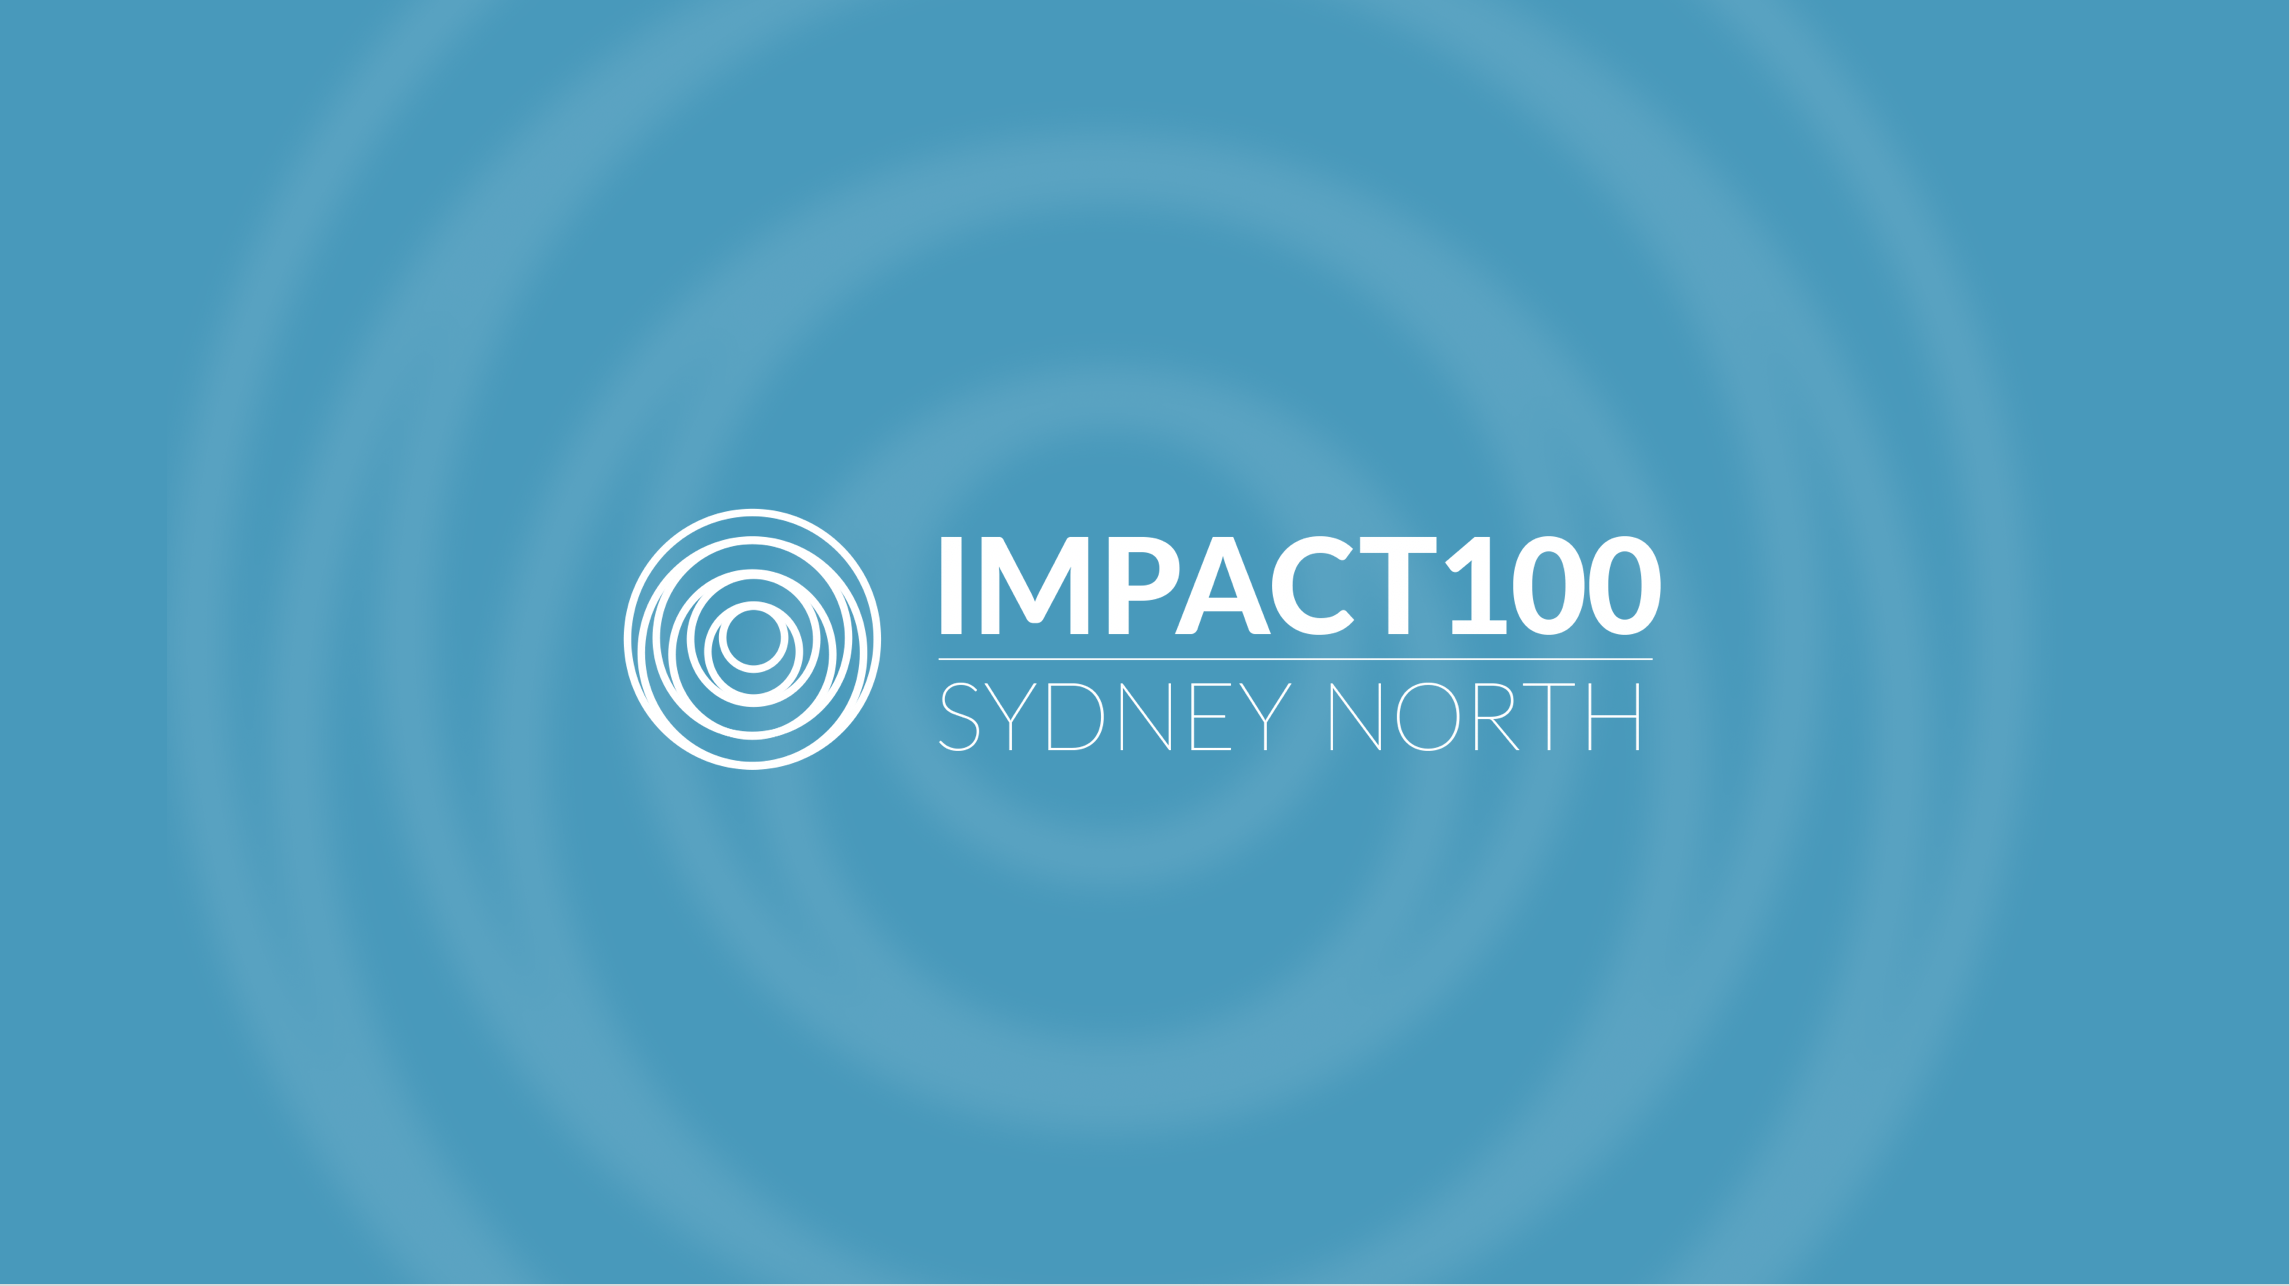 grants-impact100-sydney-northimpact100-sydney-north